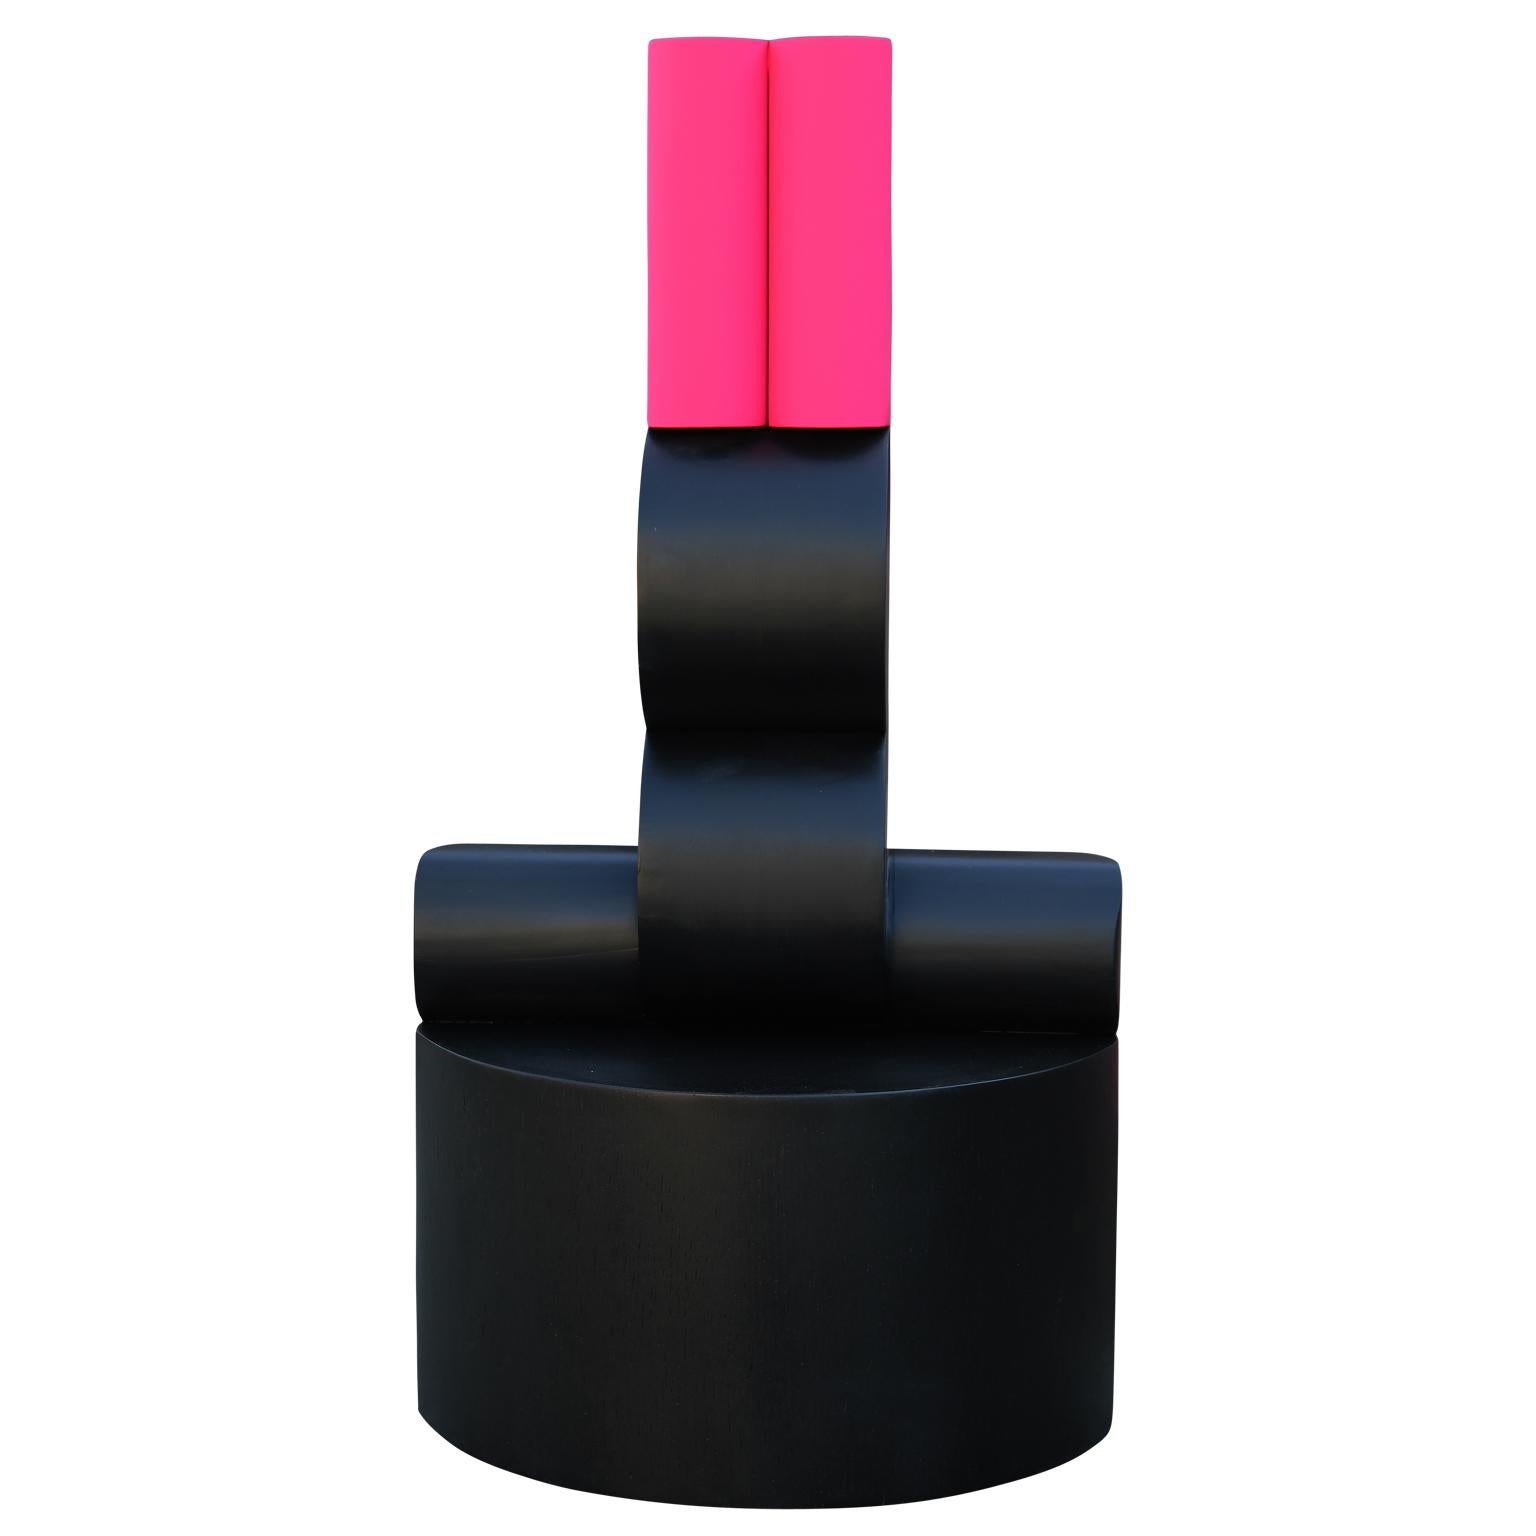 "Channel Marker 52 - Galveston, TX" Black & Neon Pink Contemporary Sculpture - Art by Matthew Reeves